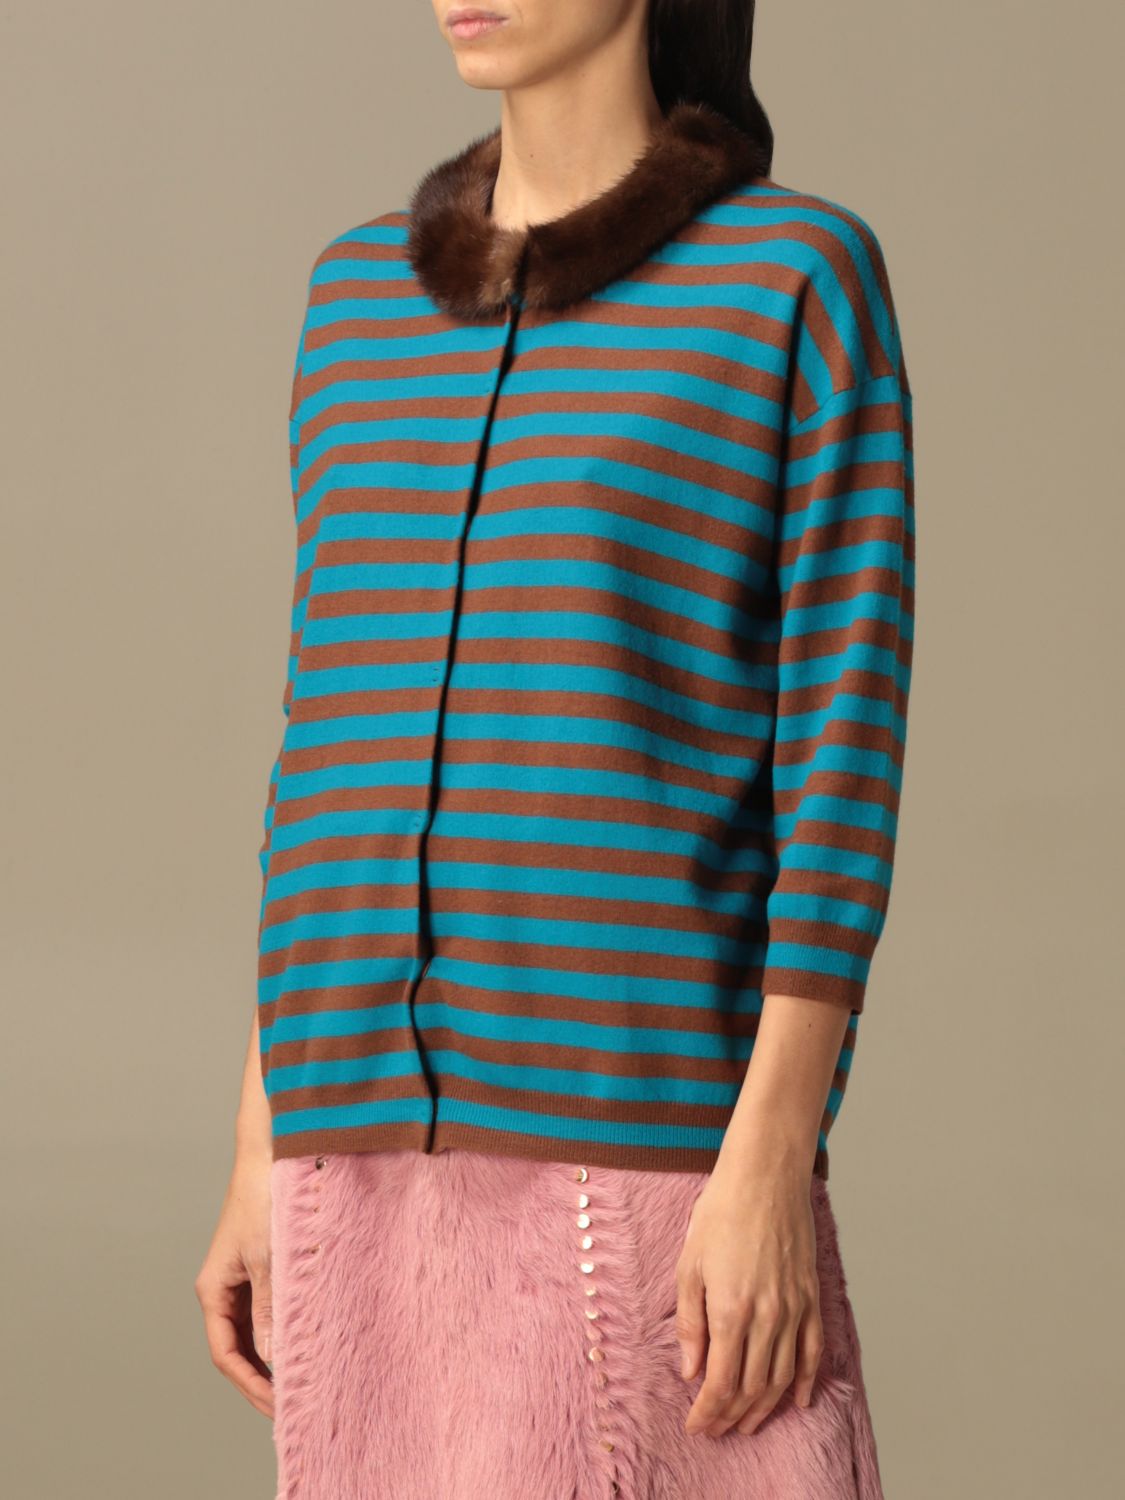 Prada Outlet: jumper for women - Striped | Prada jumper p25c74 1h2p online  on 